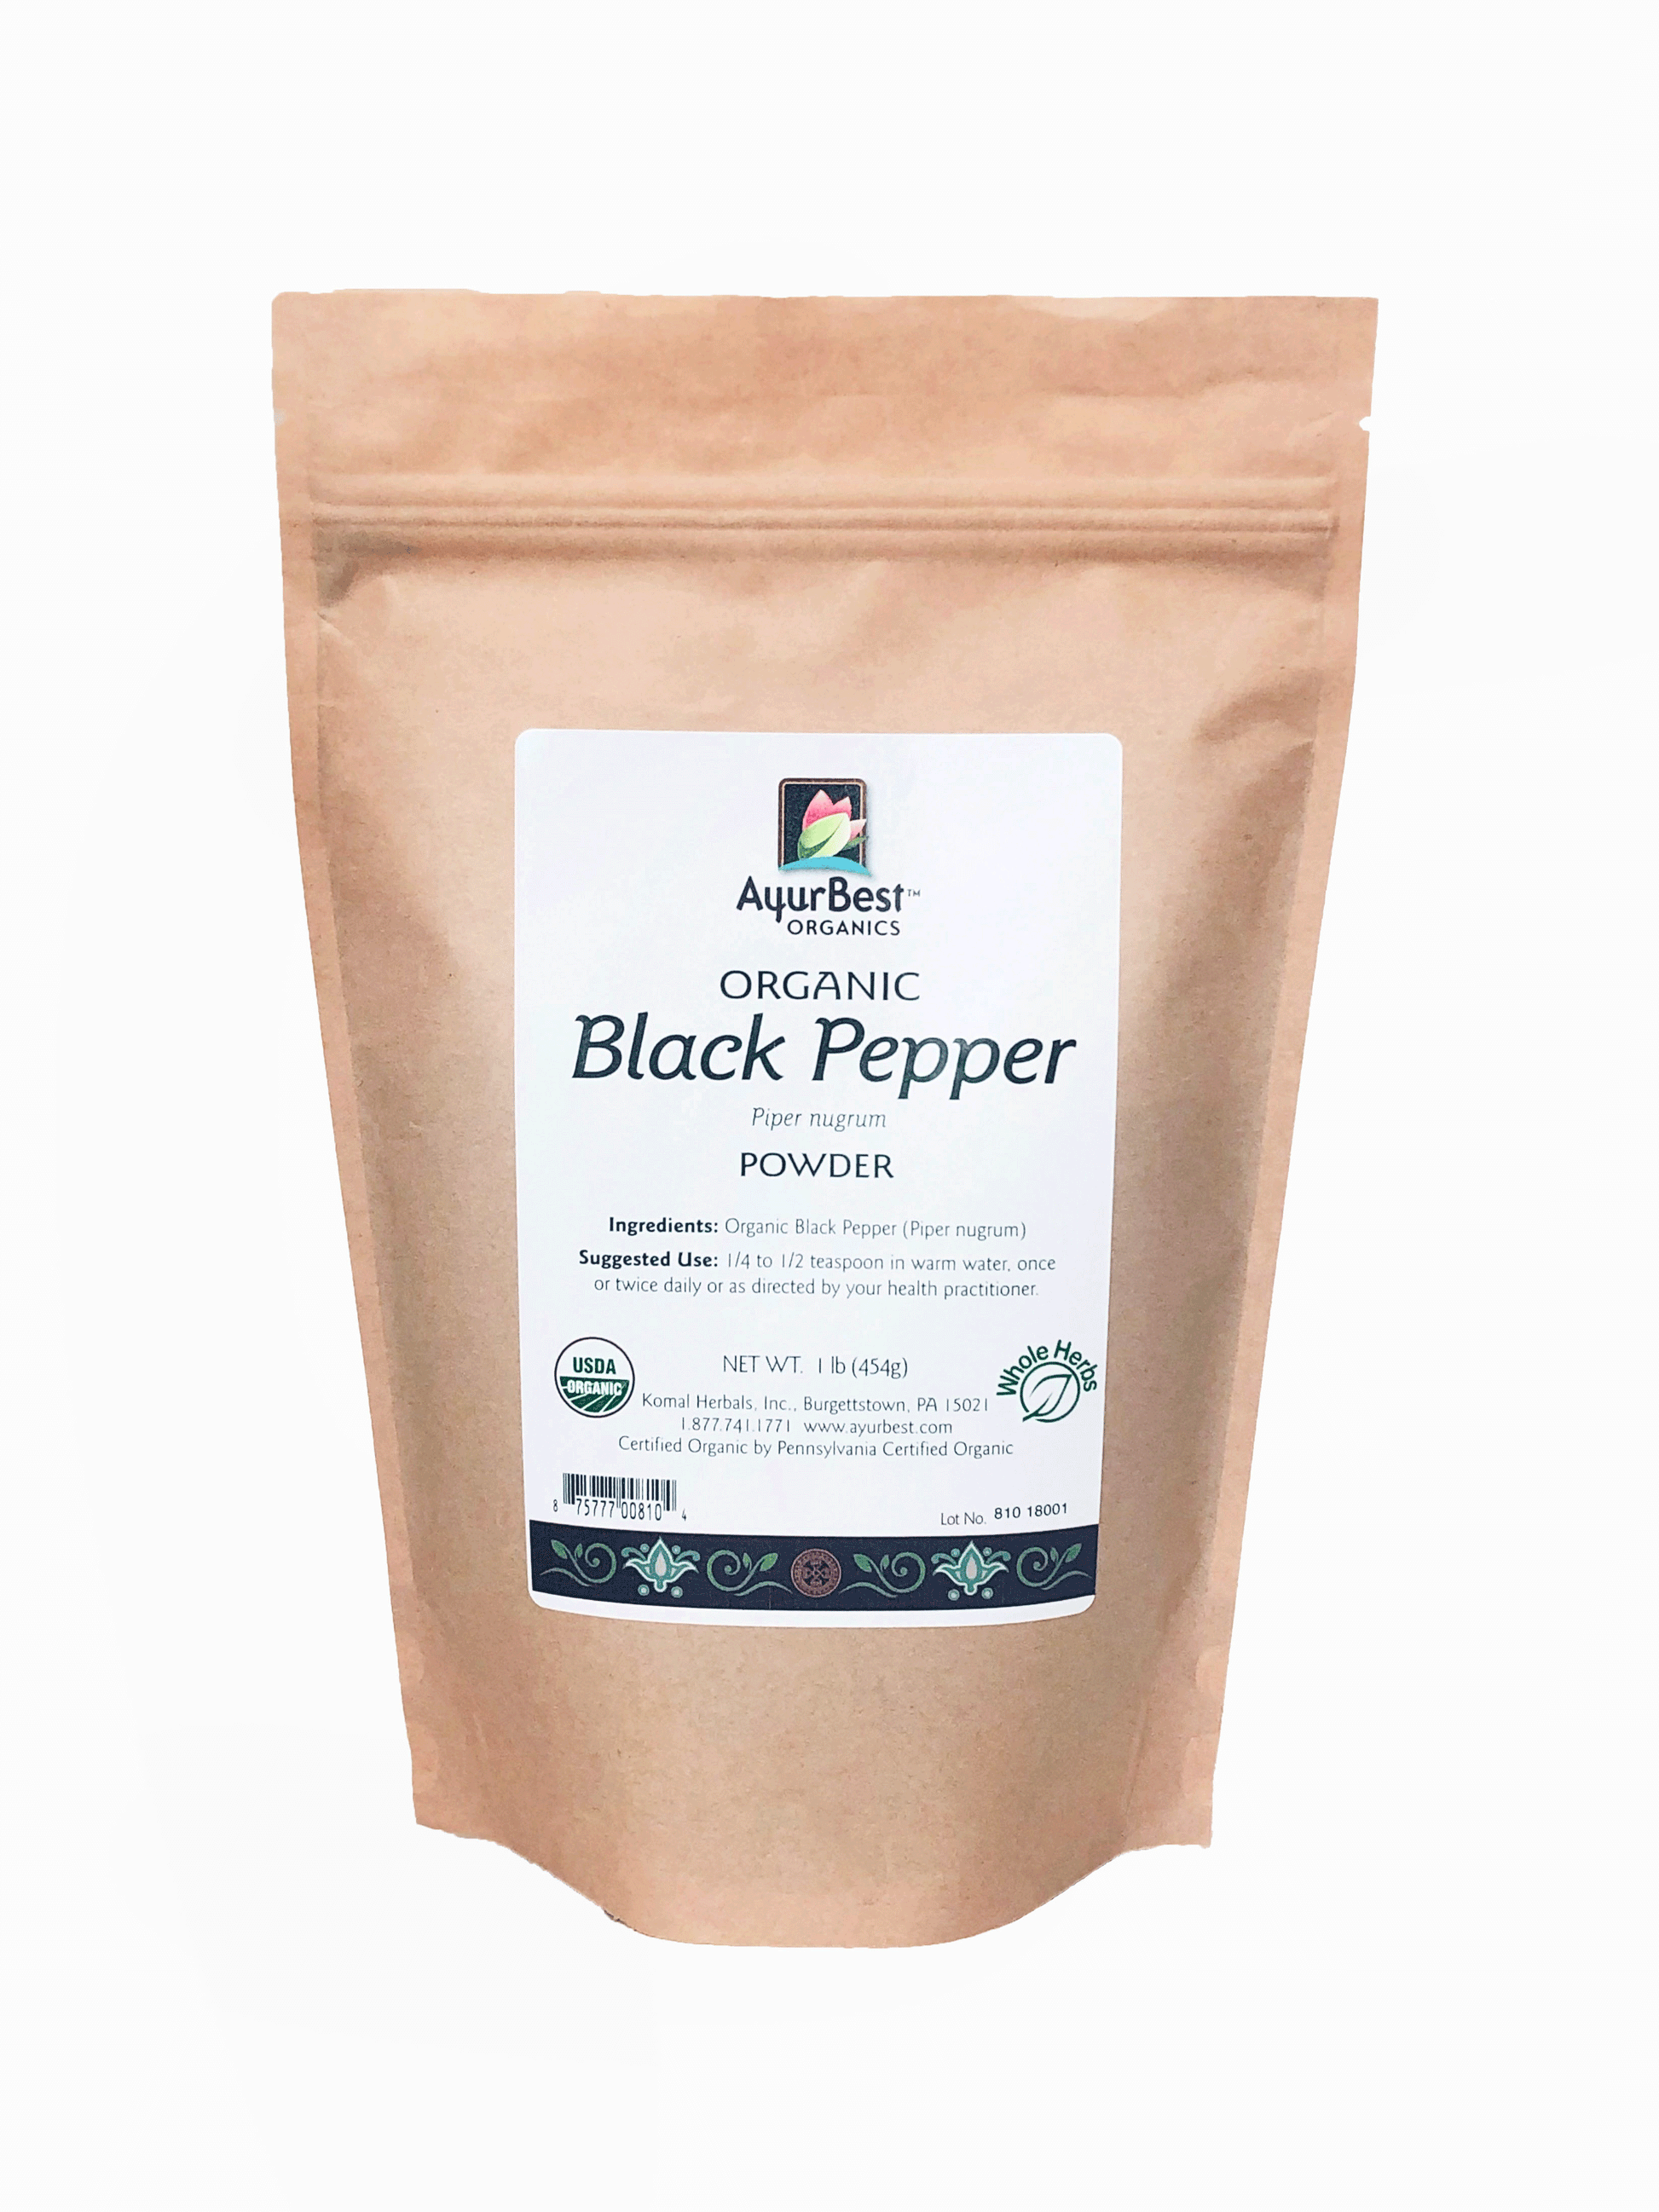 Buy Organic Black Pepper in bulk 1lb bag!